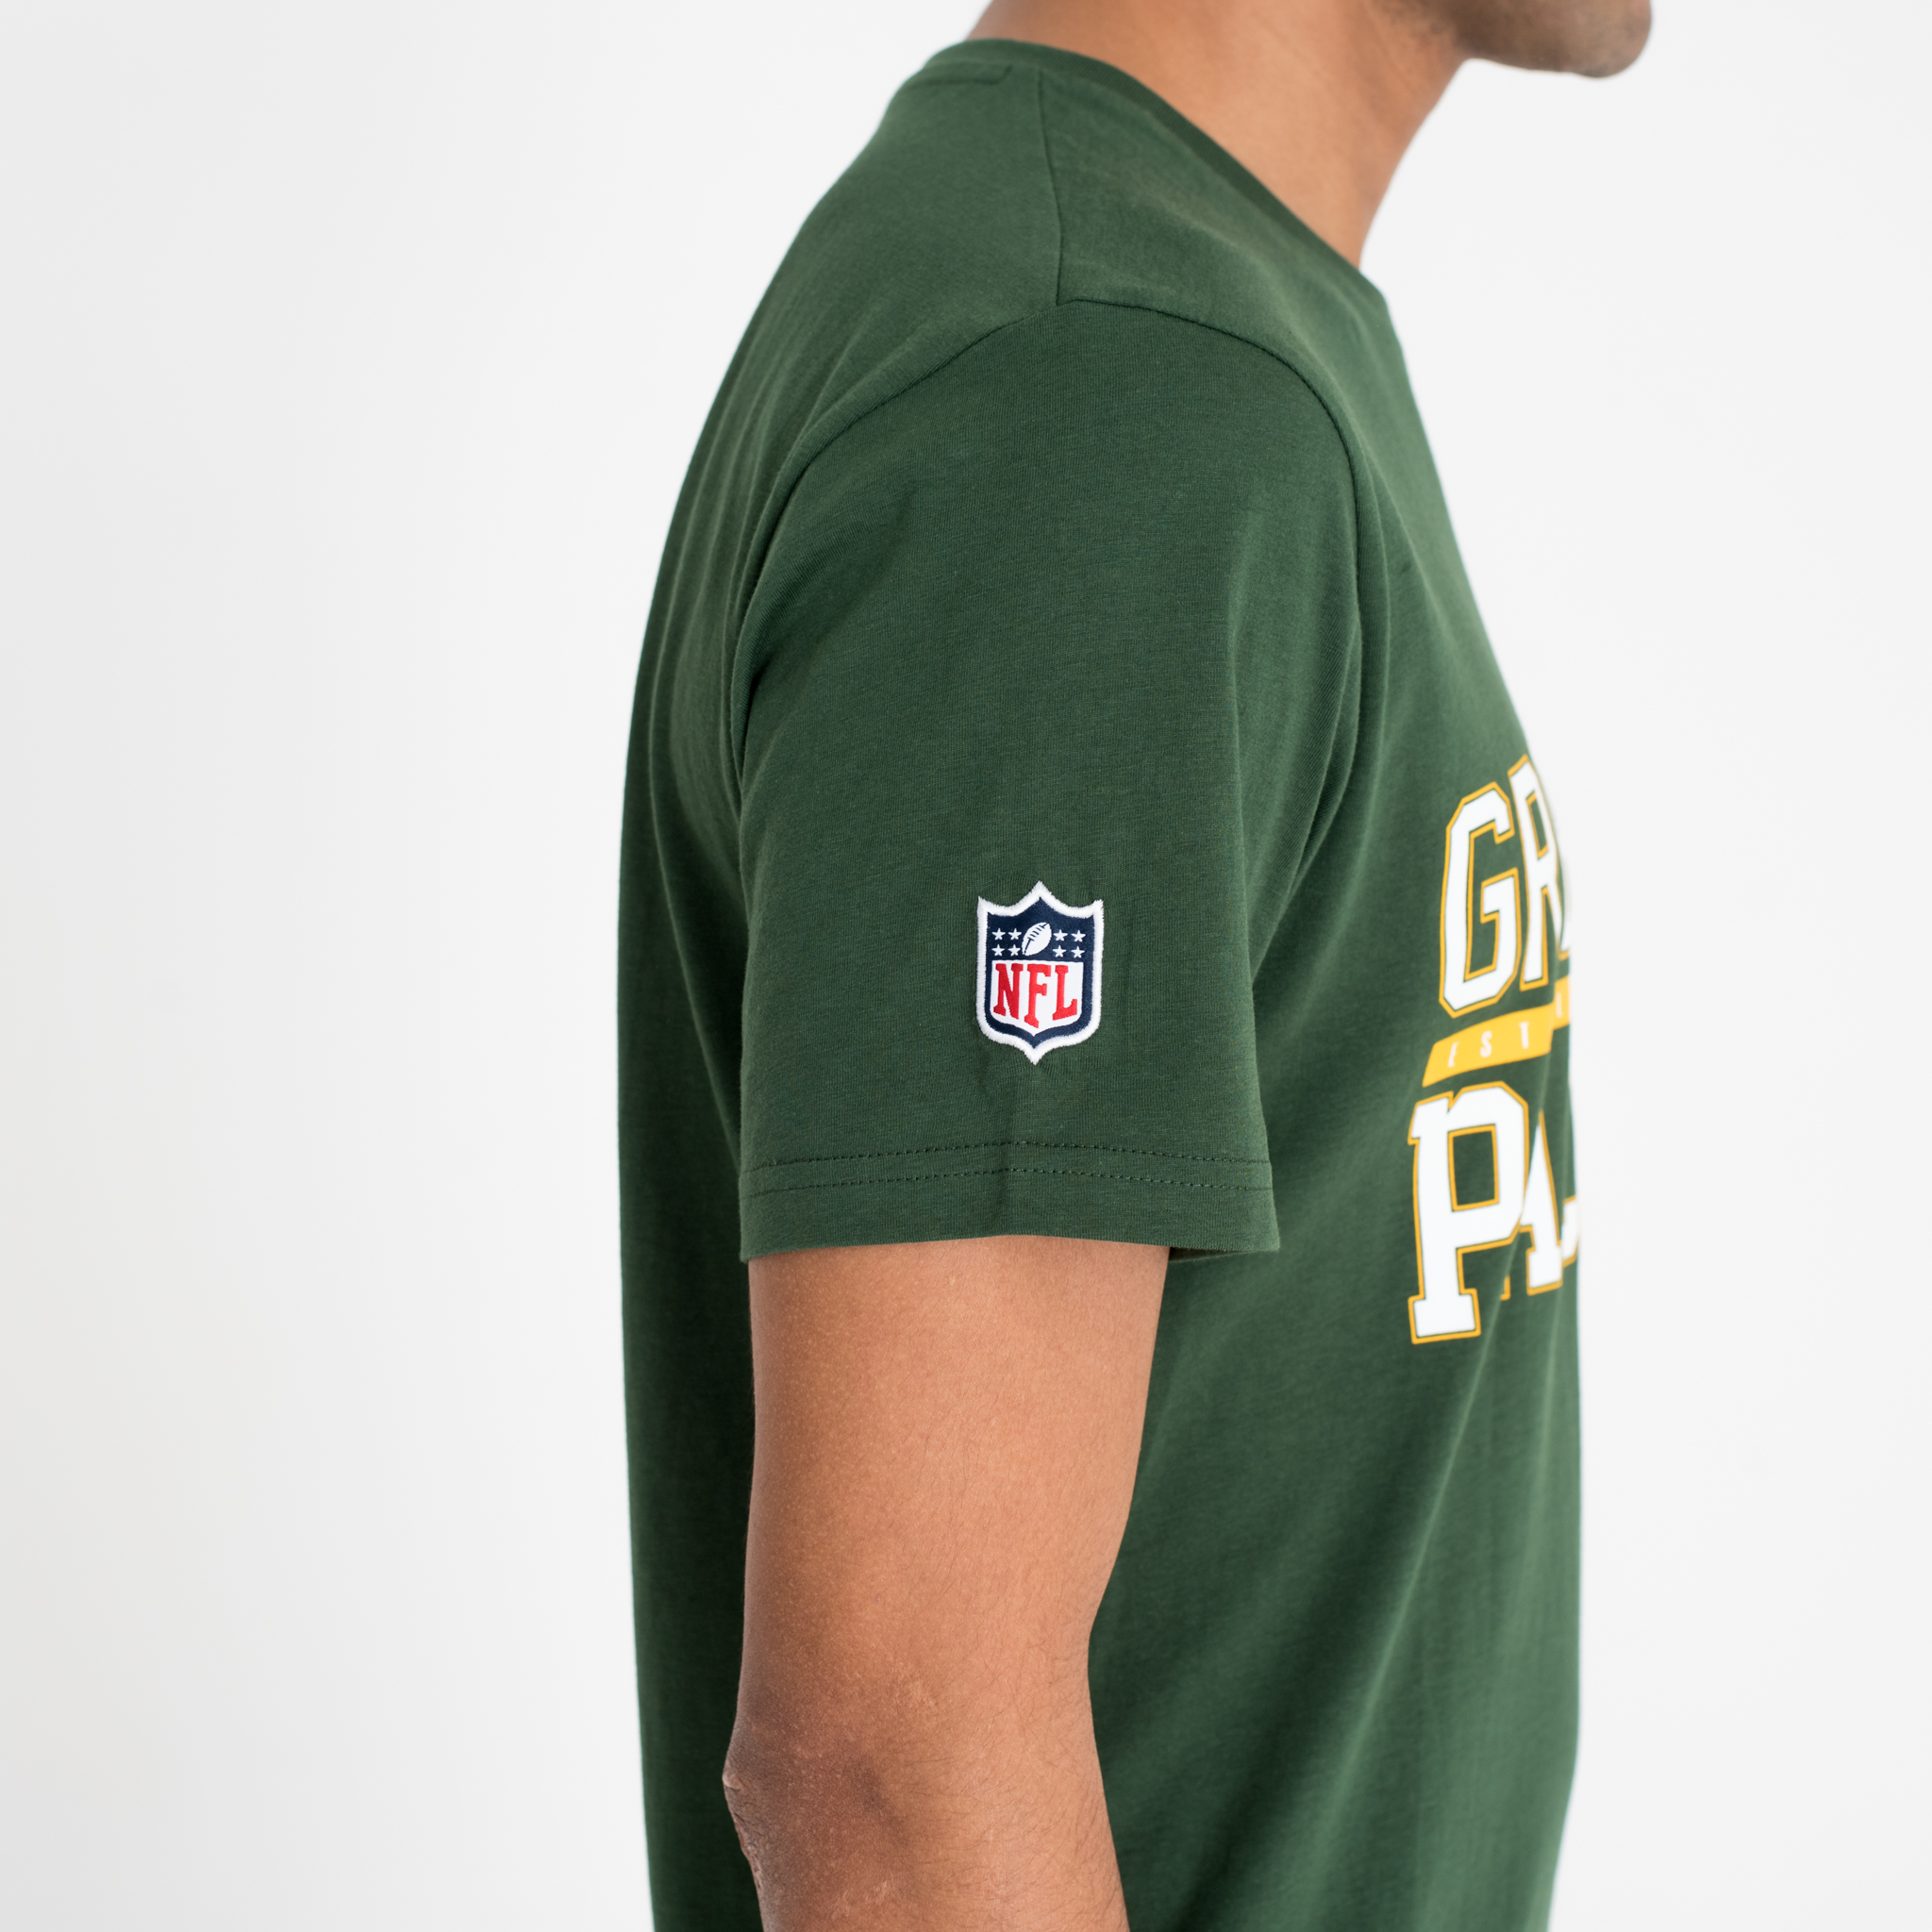 Green Bay Packers – Stacked Wordmark – T-Shirt – Grün